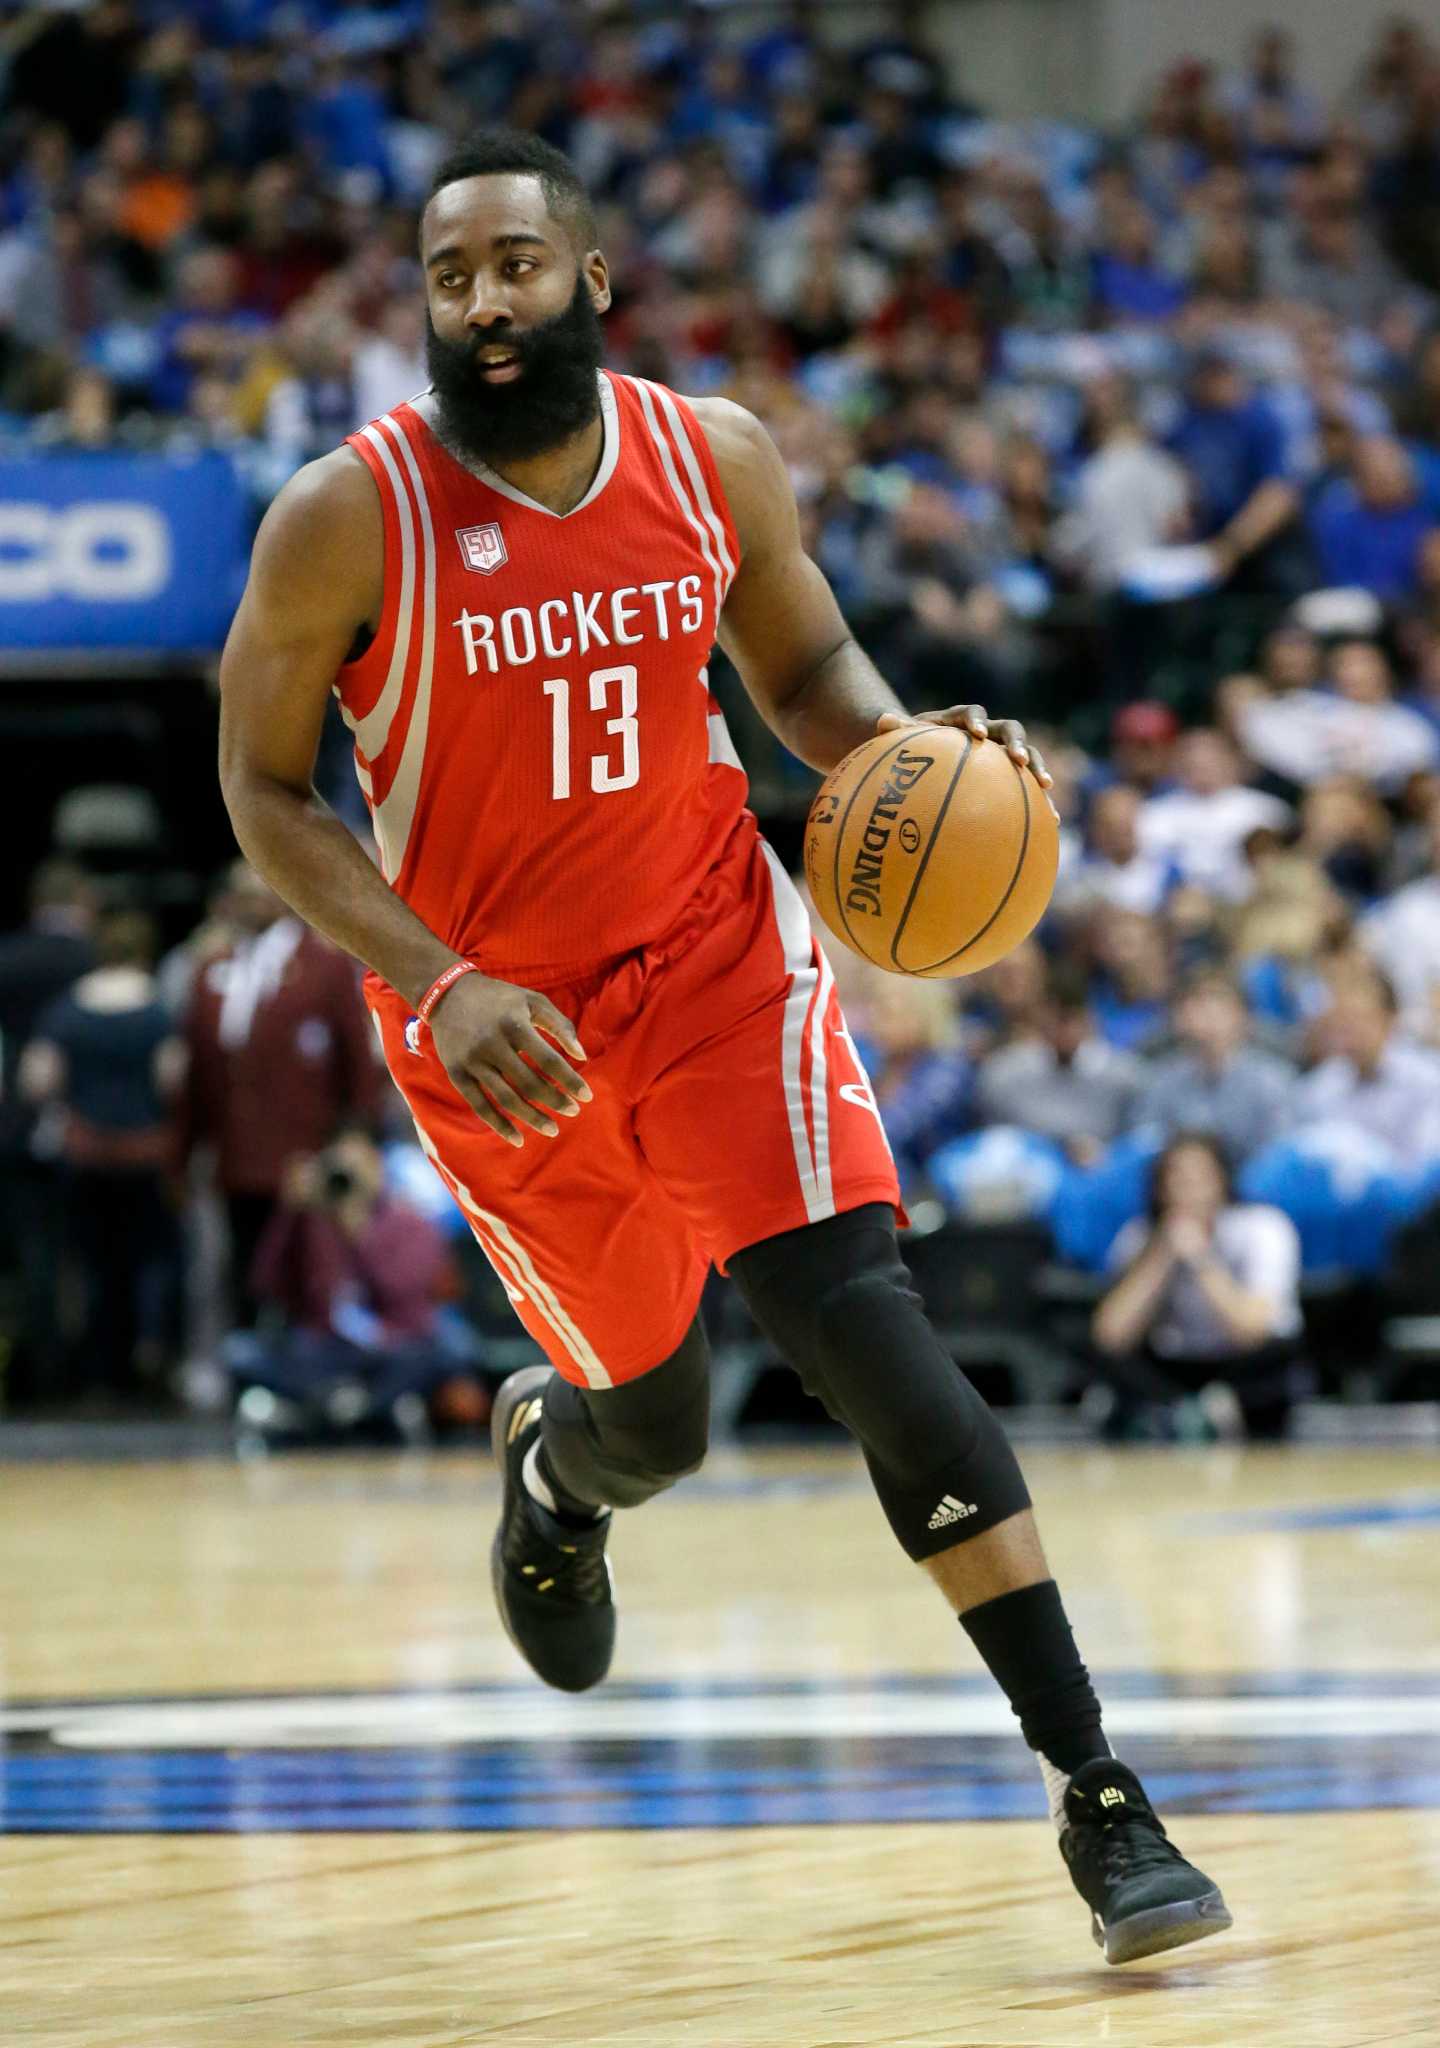 Rockets' James Harden earns starting berth in NBA AllStar Game